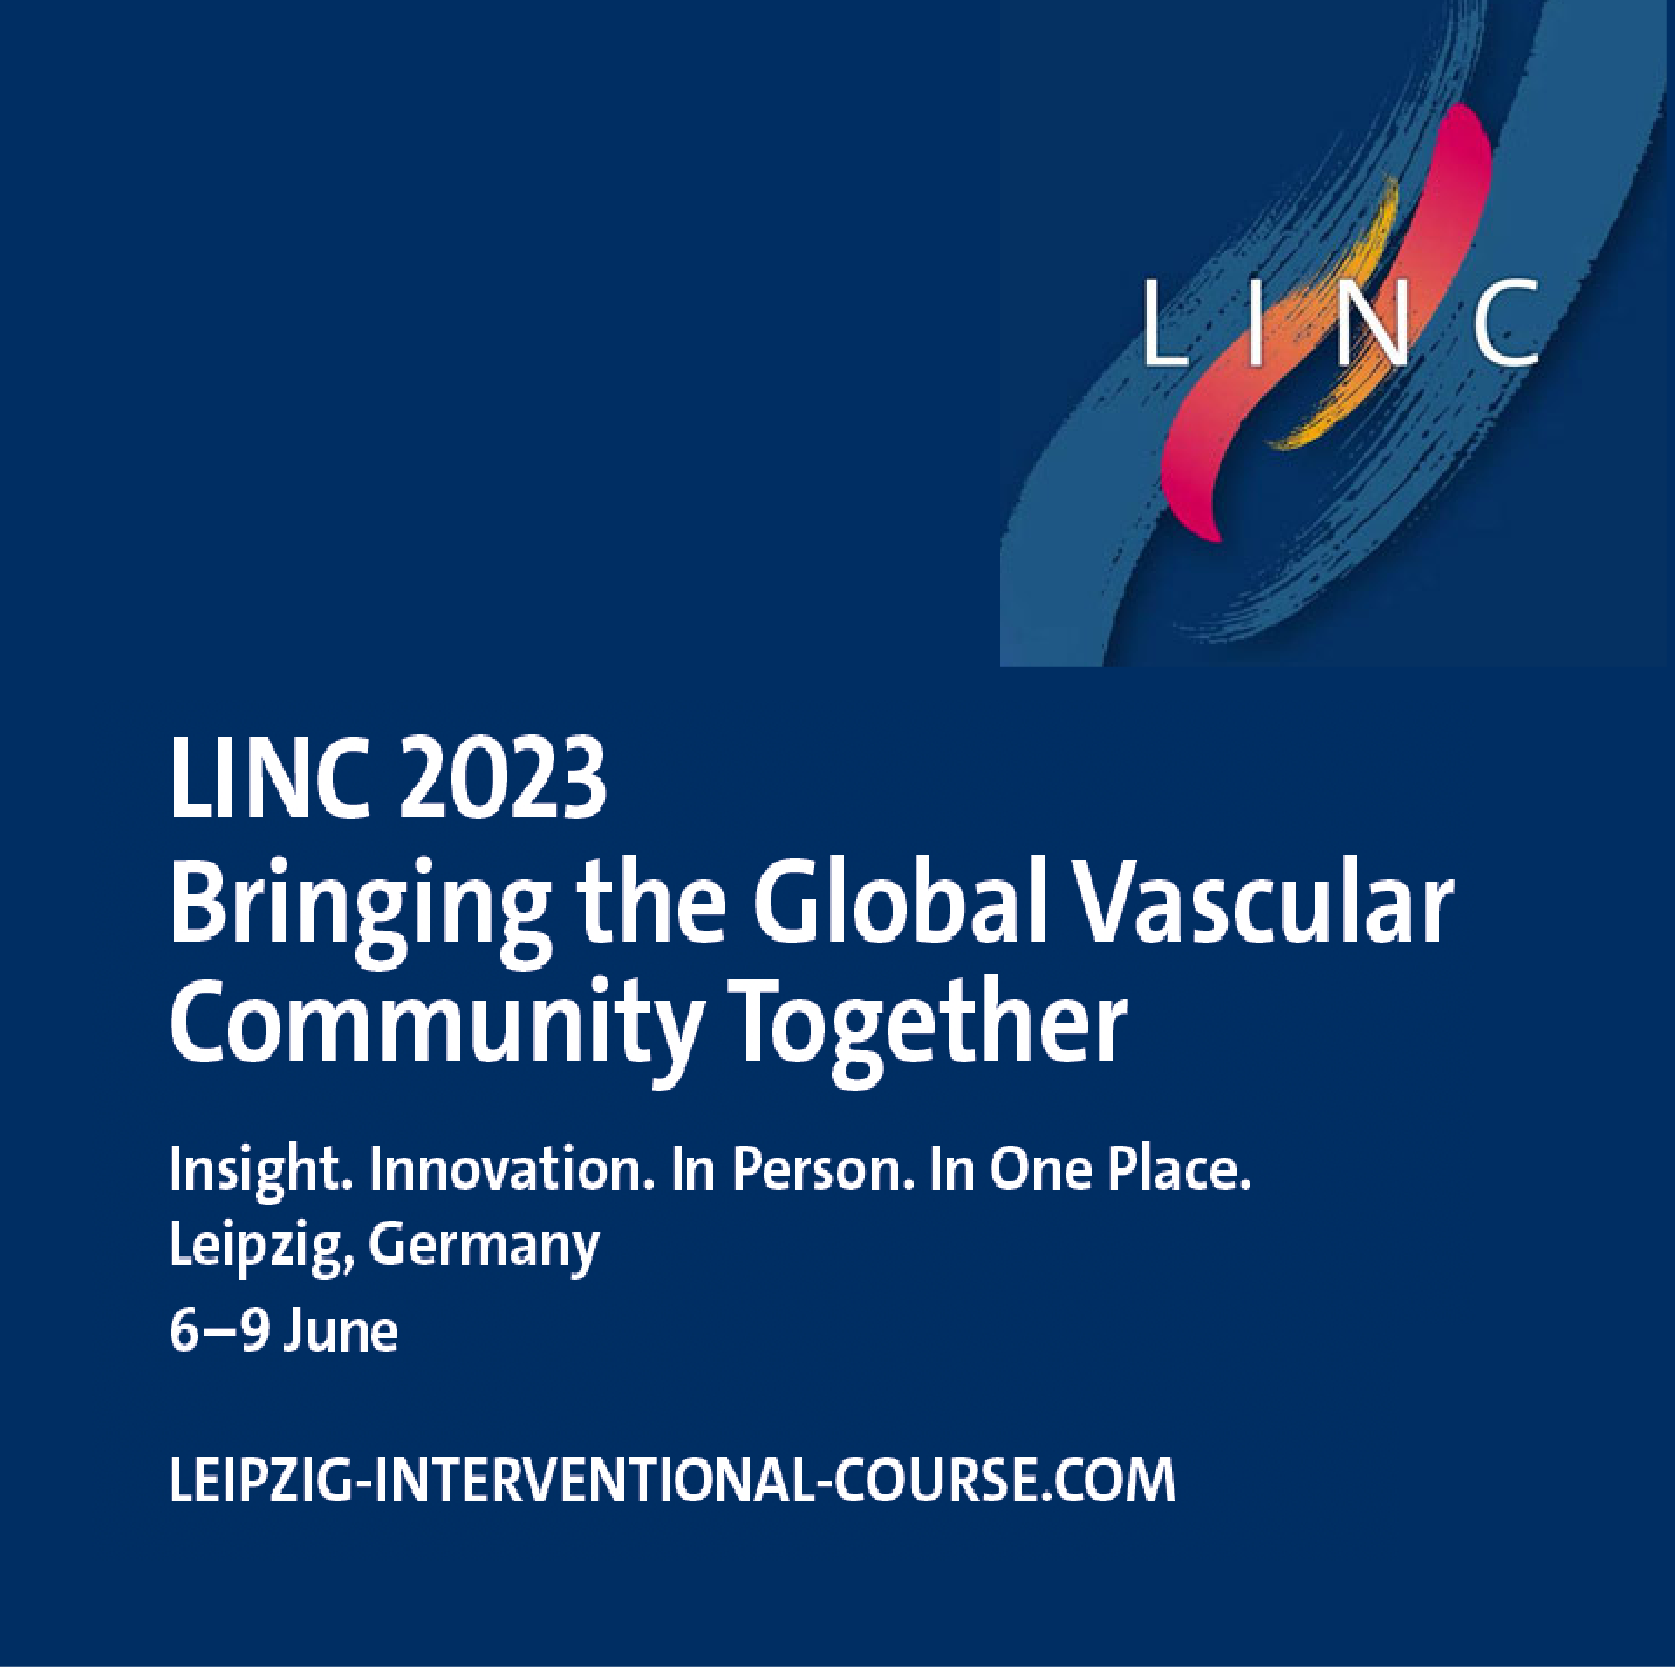 Leipzig Interventional Course - LINC 2023